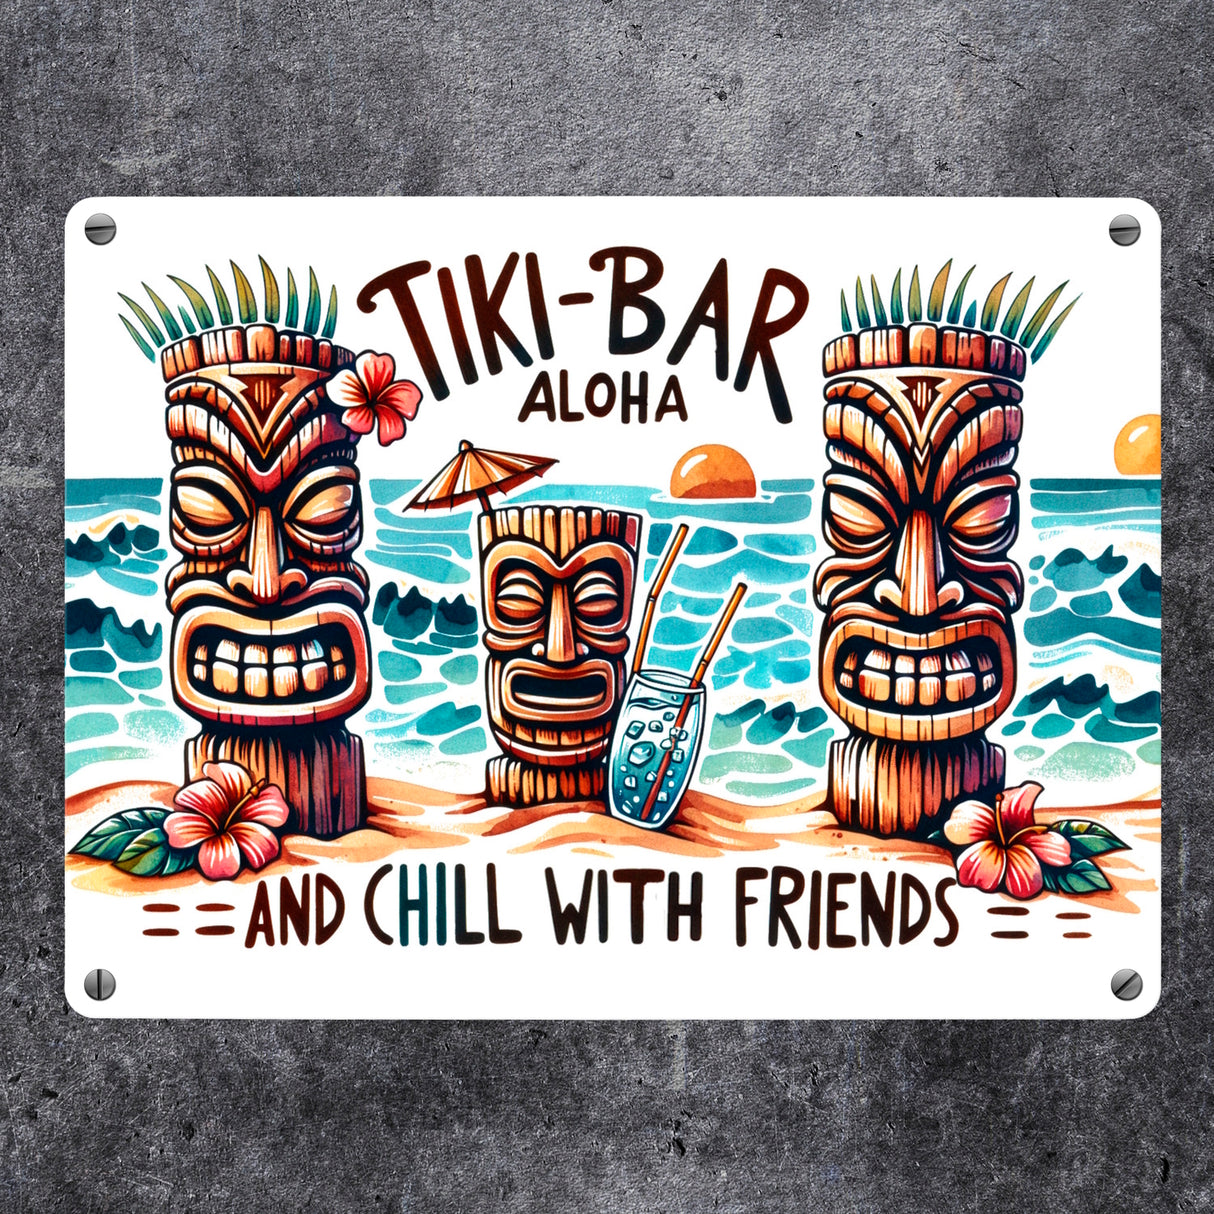 Tiki-Bar Aloha Metallschild in 15x20 cm mit Spruch and chill with friends